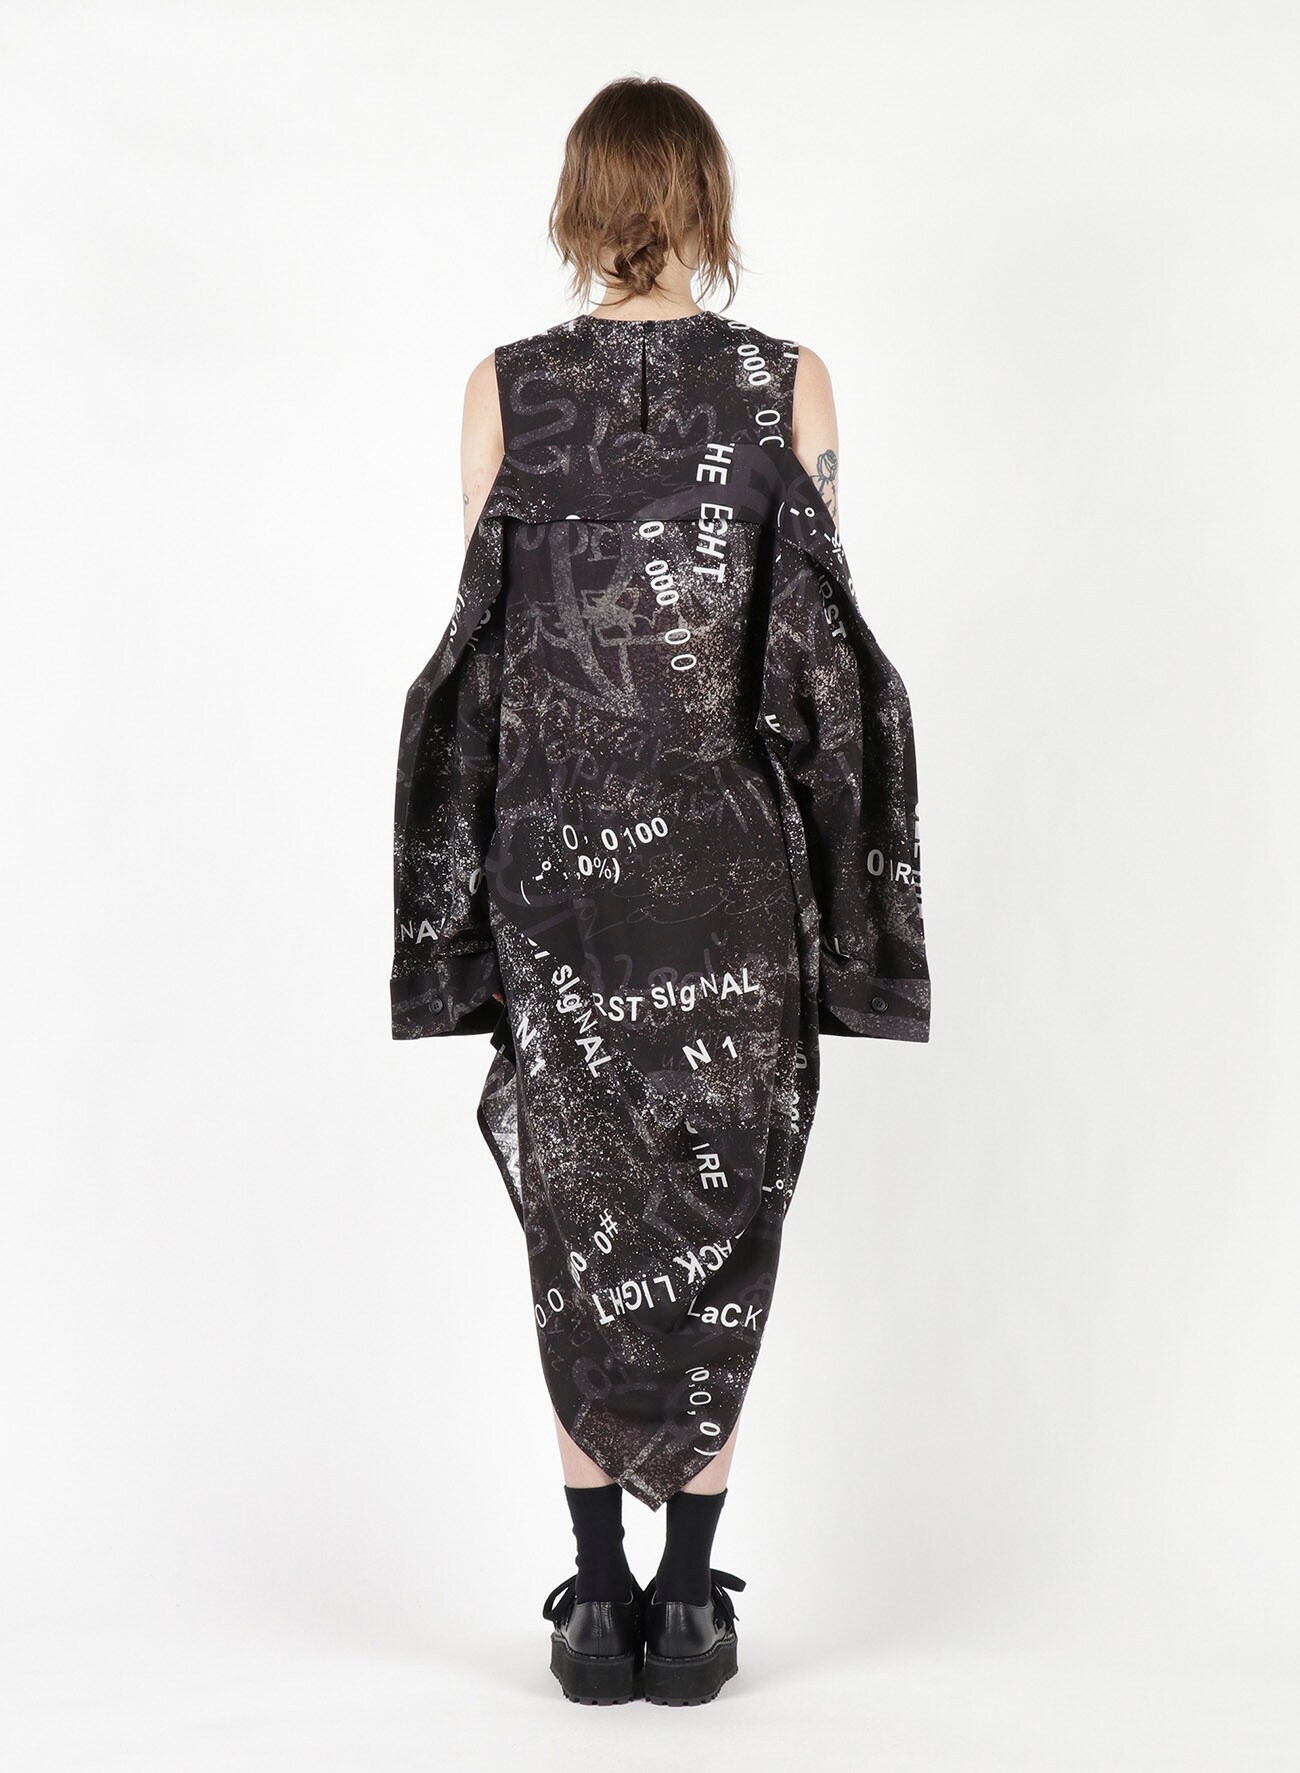 Black Light Print B Cross Off Shoulder Dress(S Black